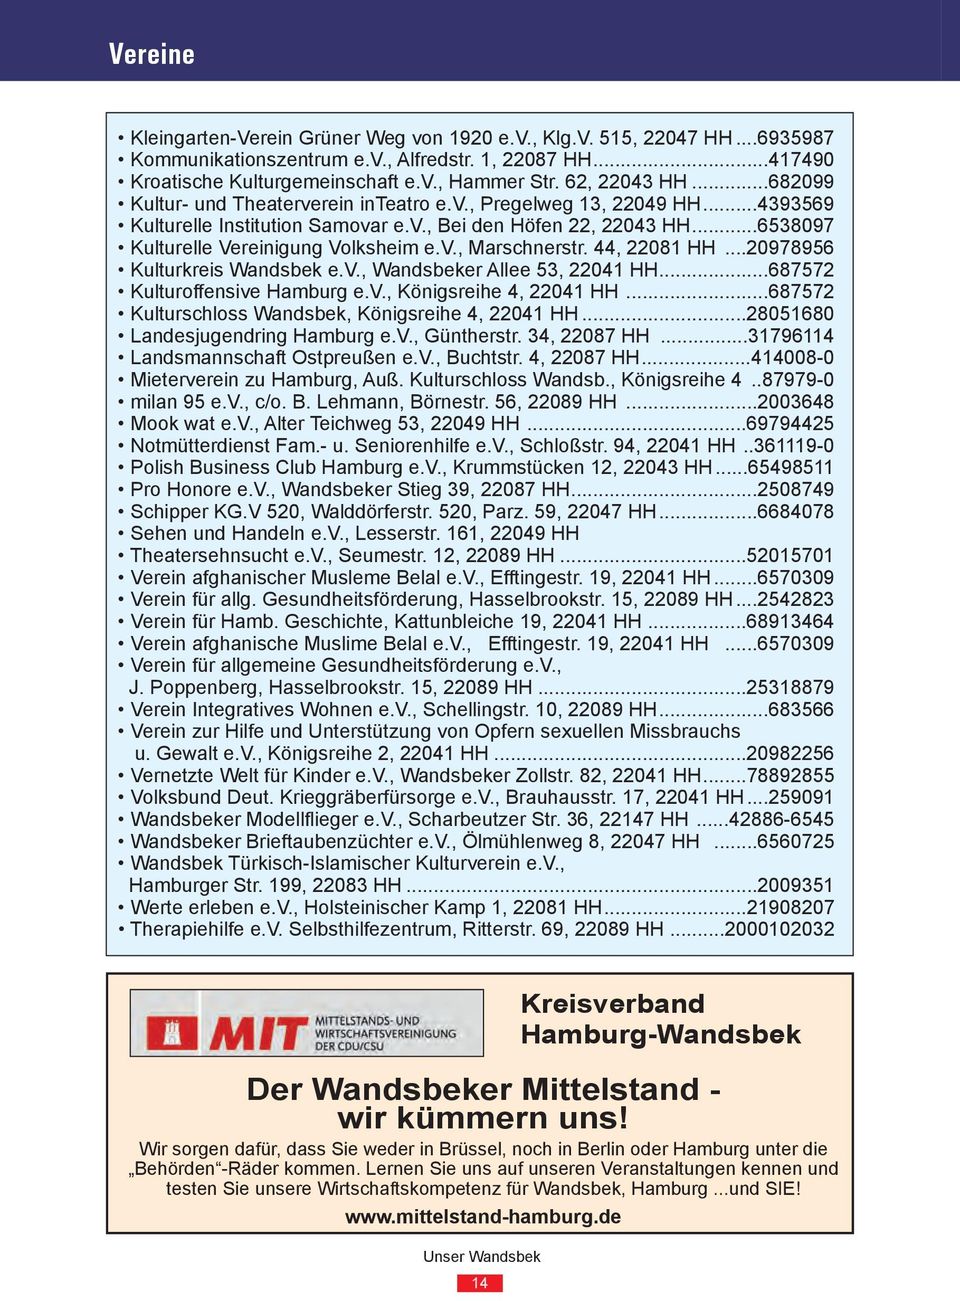 ..6538097 Kulturelle Vereinigung Volksheim e.v., Marschnerstr. 44, 22081 HH...20978956 Kulturkreis Wandsbek e.v., Wandsbeker Allee 53, 22041 HH...687572 Kulturoffensive Hamburg e.v., Königsreihe 4, 22041 HH.